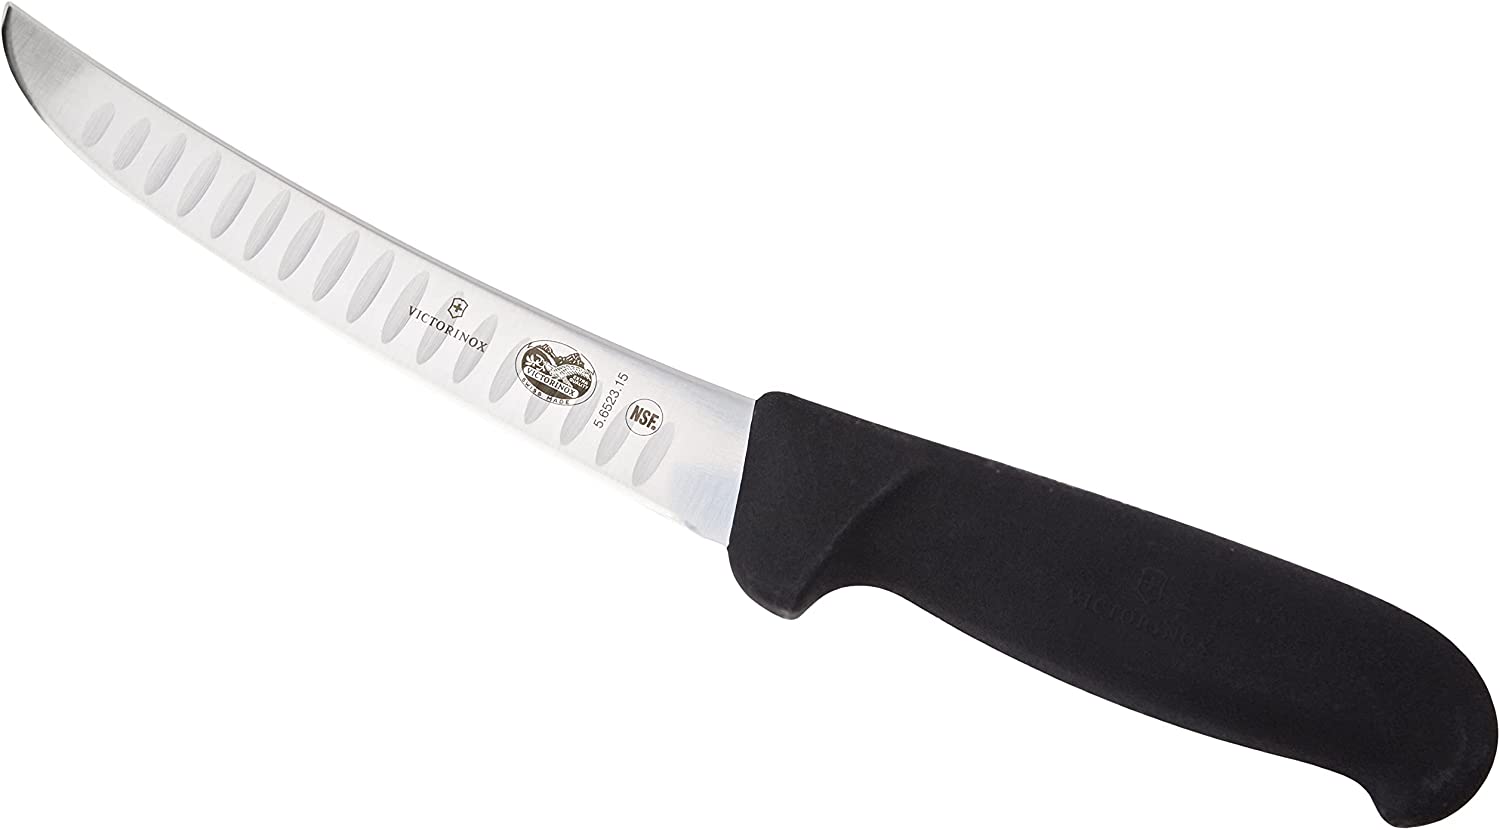 Victorinox Fibrox Kitchen Knife, Boning Knife, Black, 15 cm Knife, Steel, White